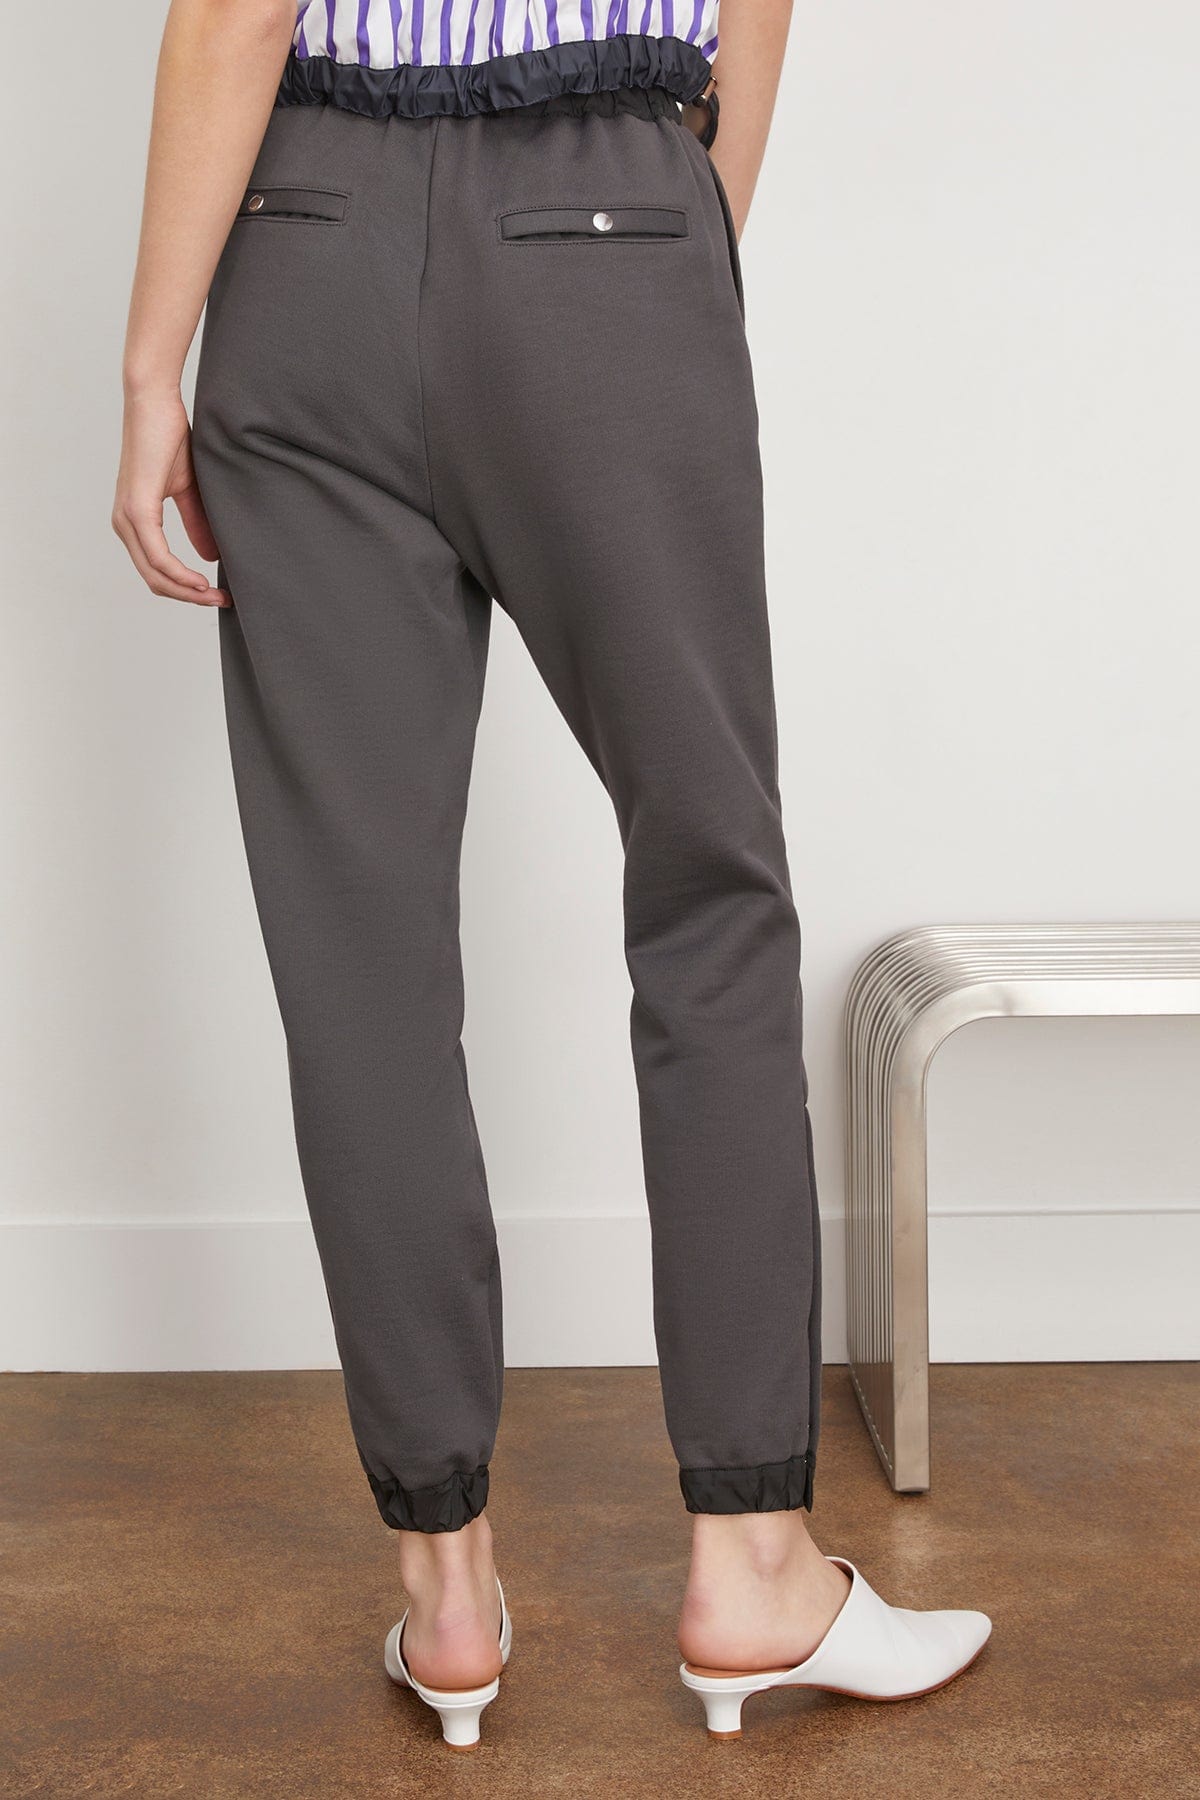 Sacai Pants Sweat Jersey Pants in Charcoal Gray Sacai Sweat Jersey Pants in Charcoal Gray